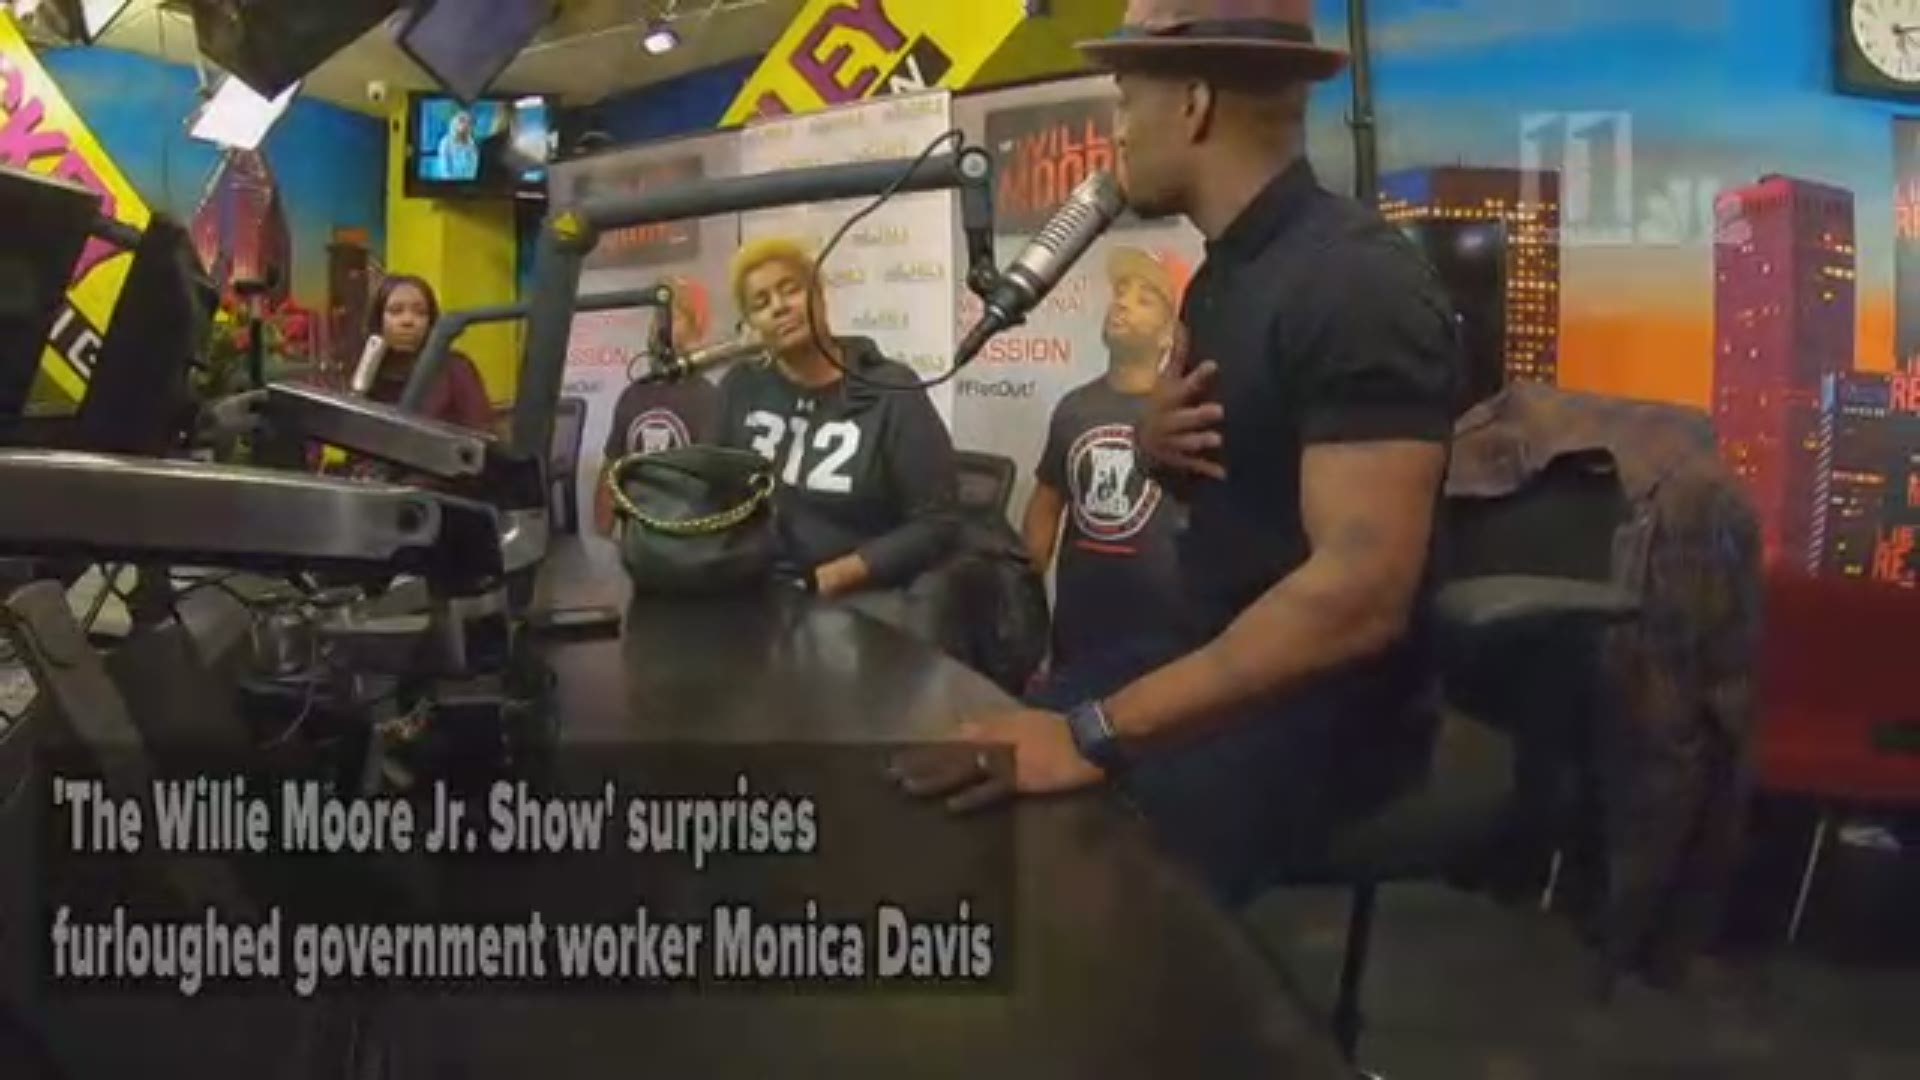 The Willie Moore Jr. Show surprises Monica Davis with a check.